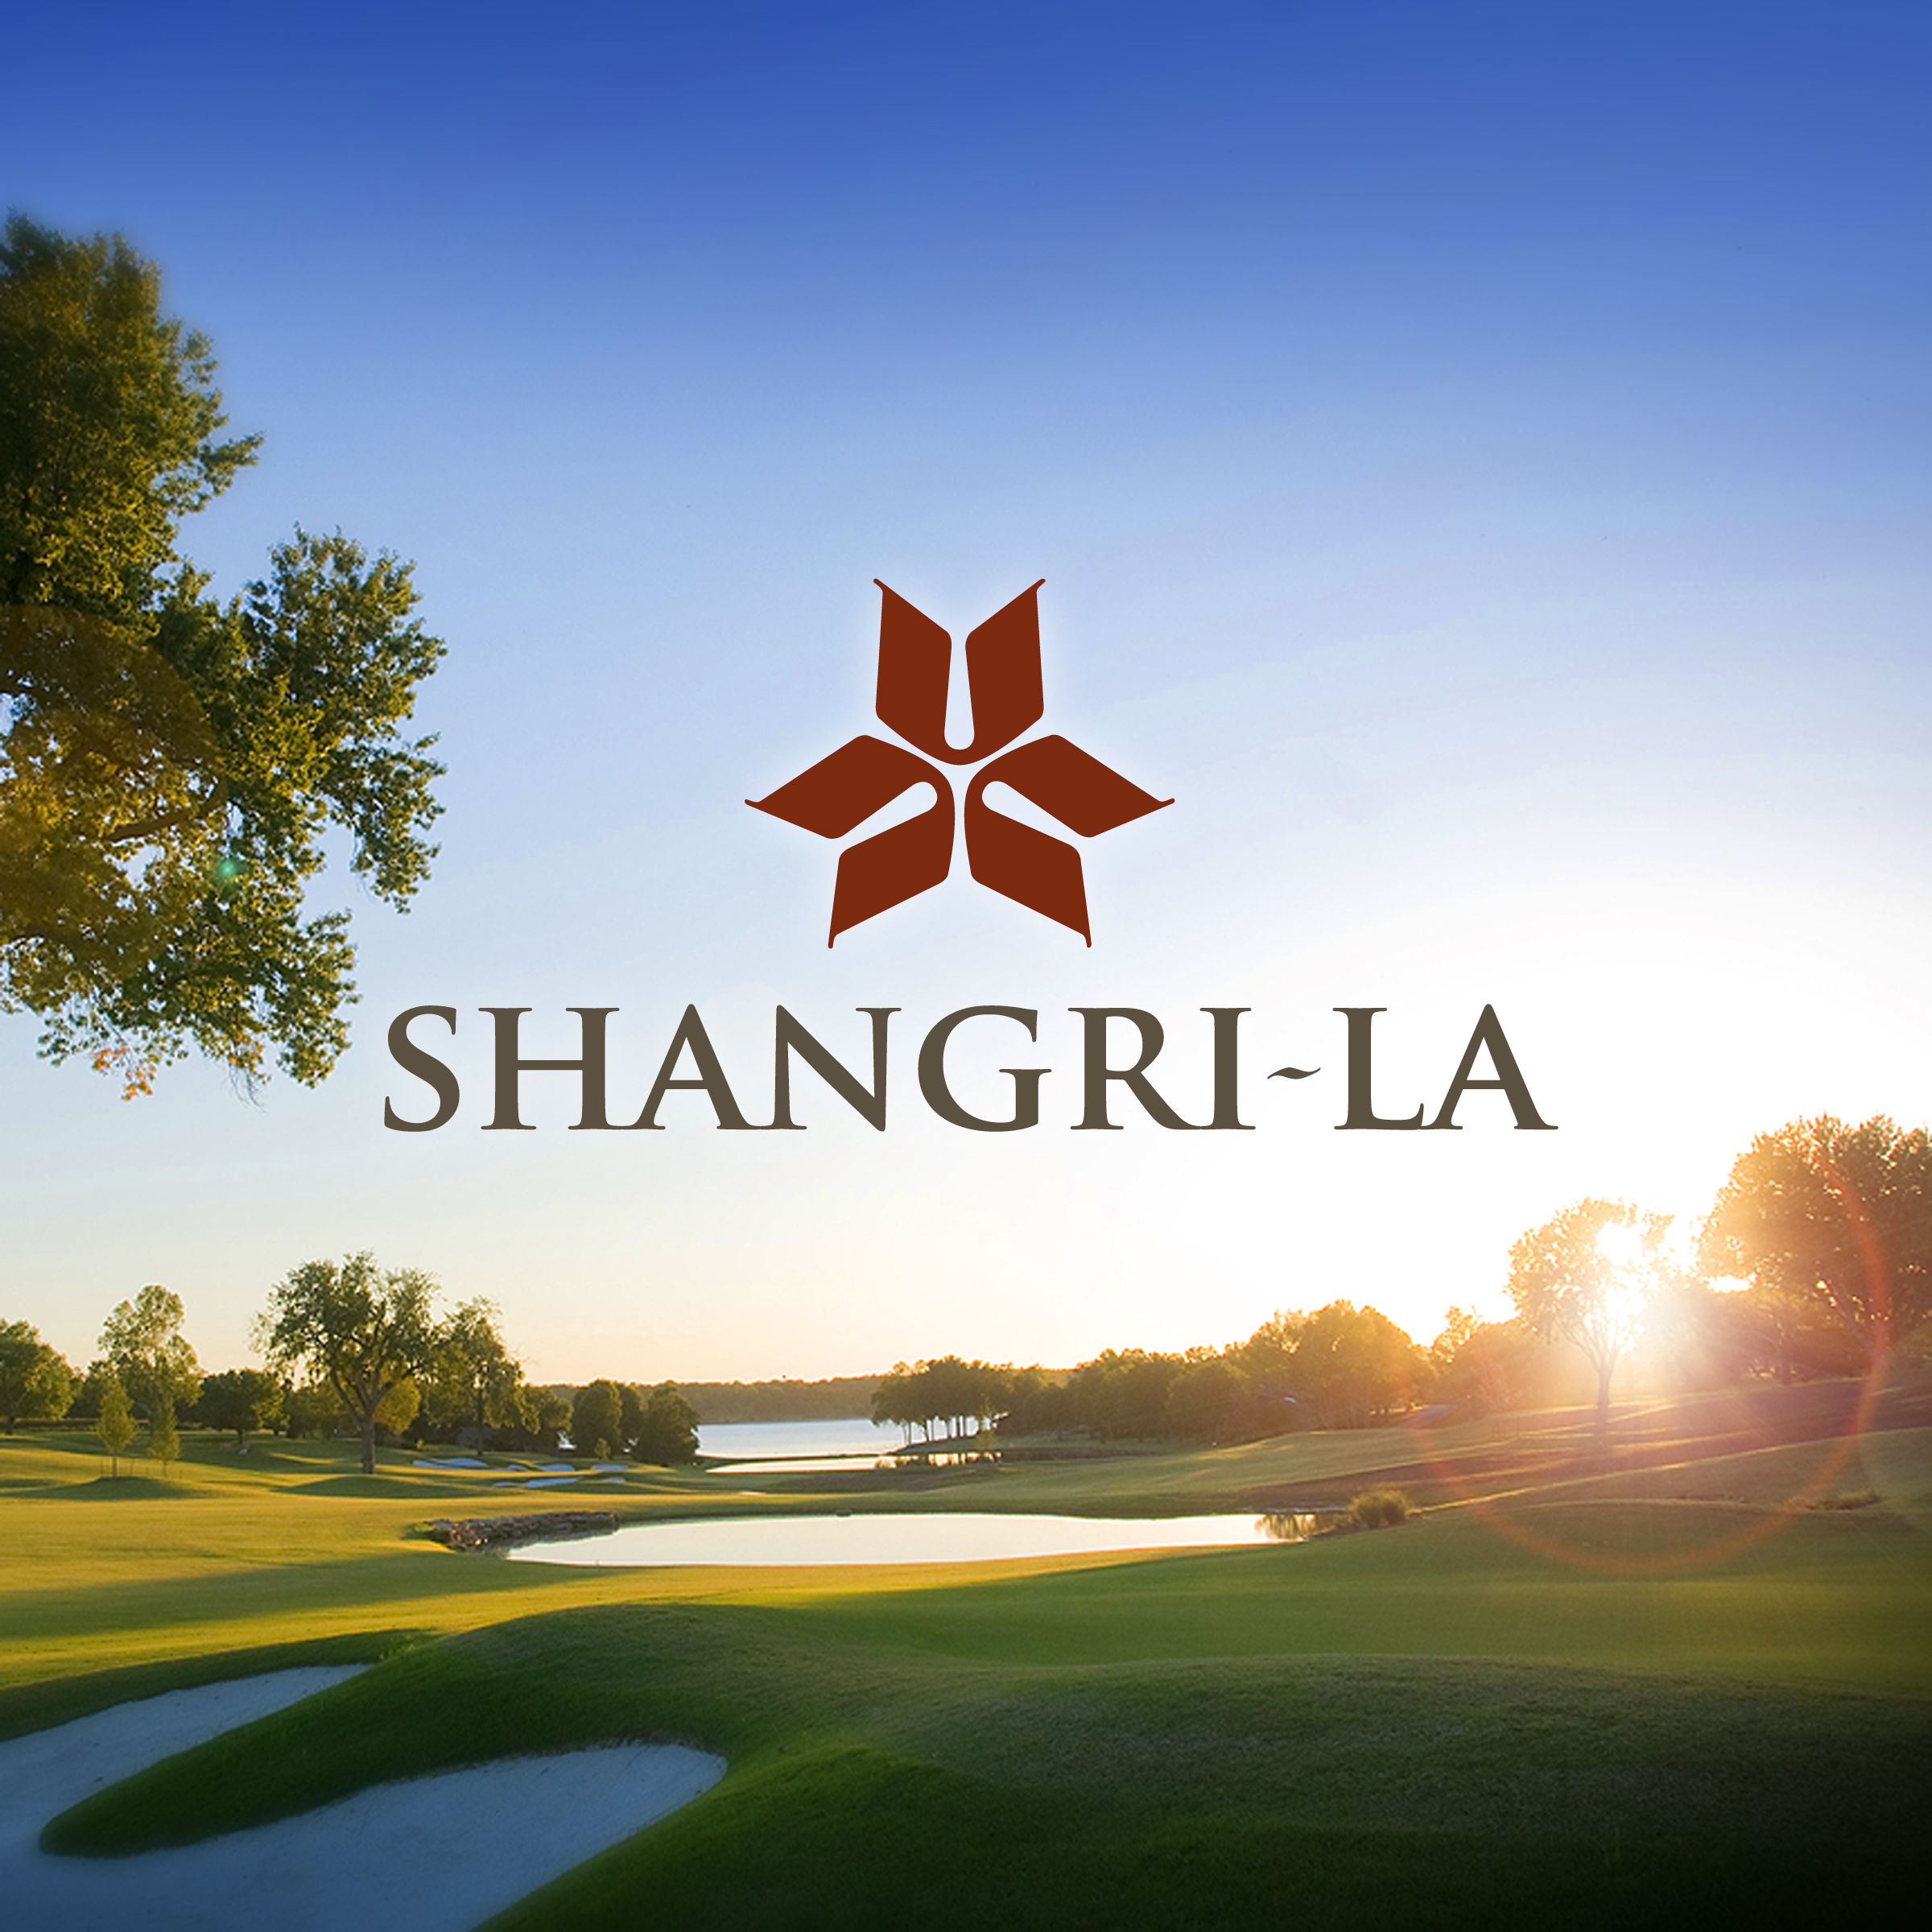 Shangri-La Resort paves the way for innovation and recreation on Grand Lake